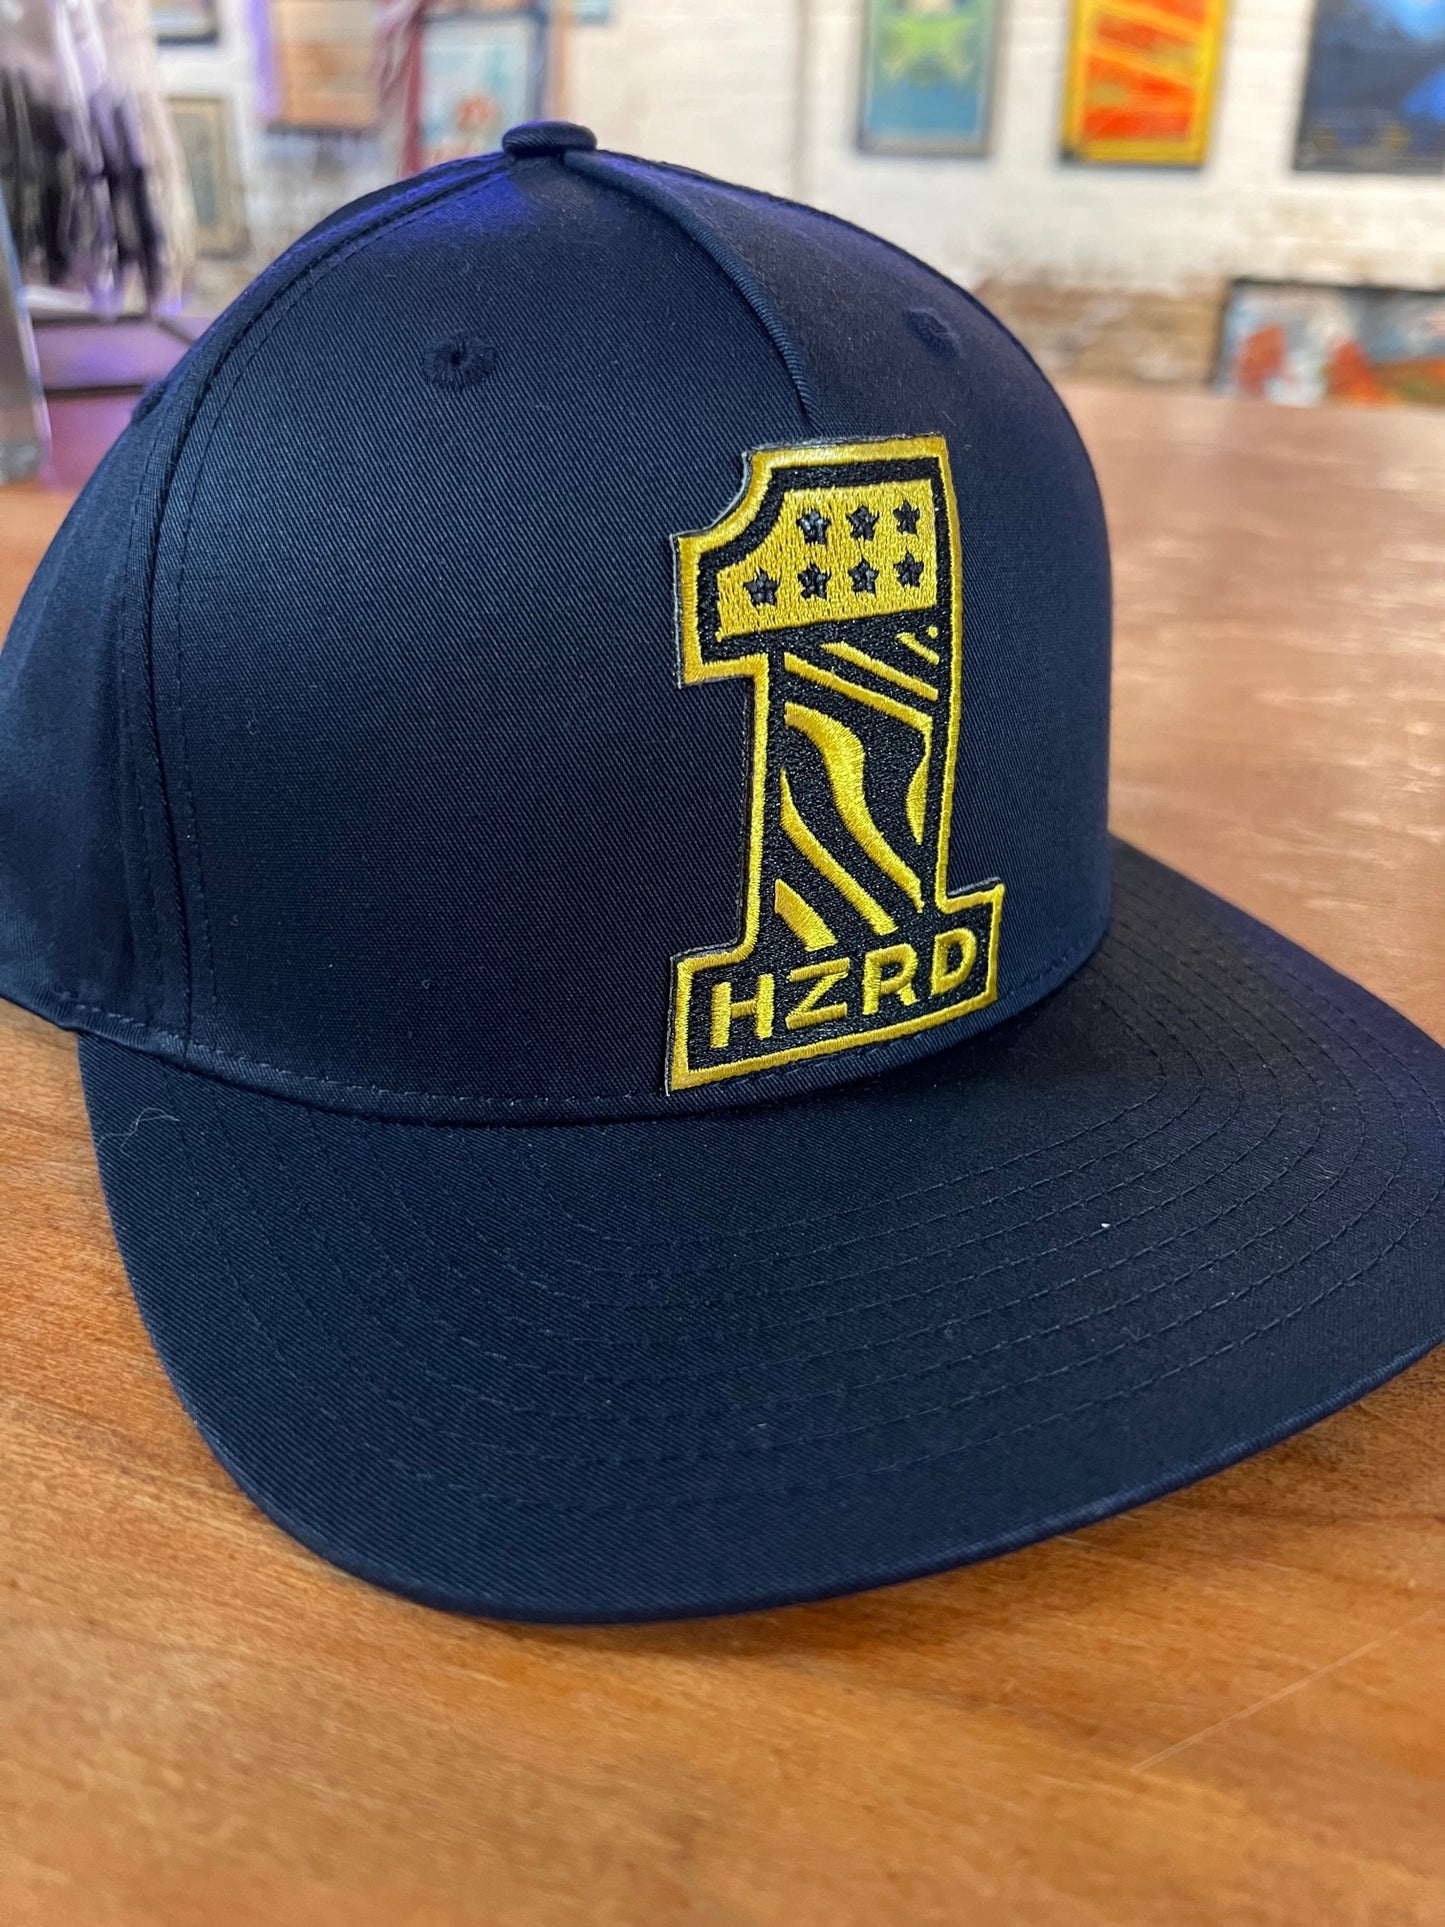 Half Hazard Snapback hat